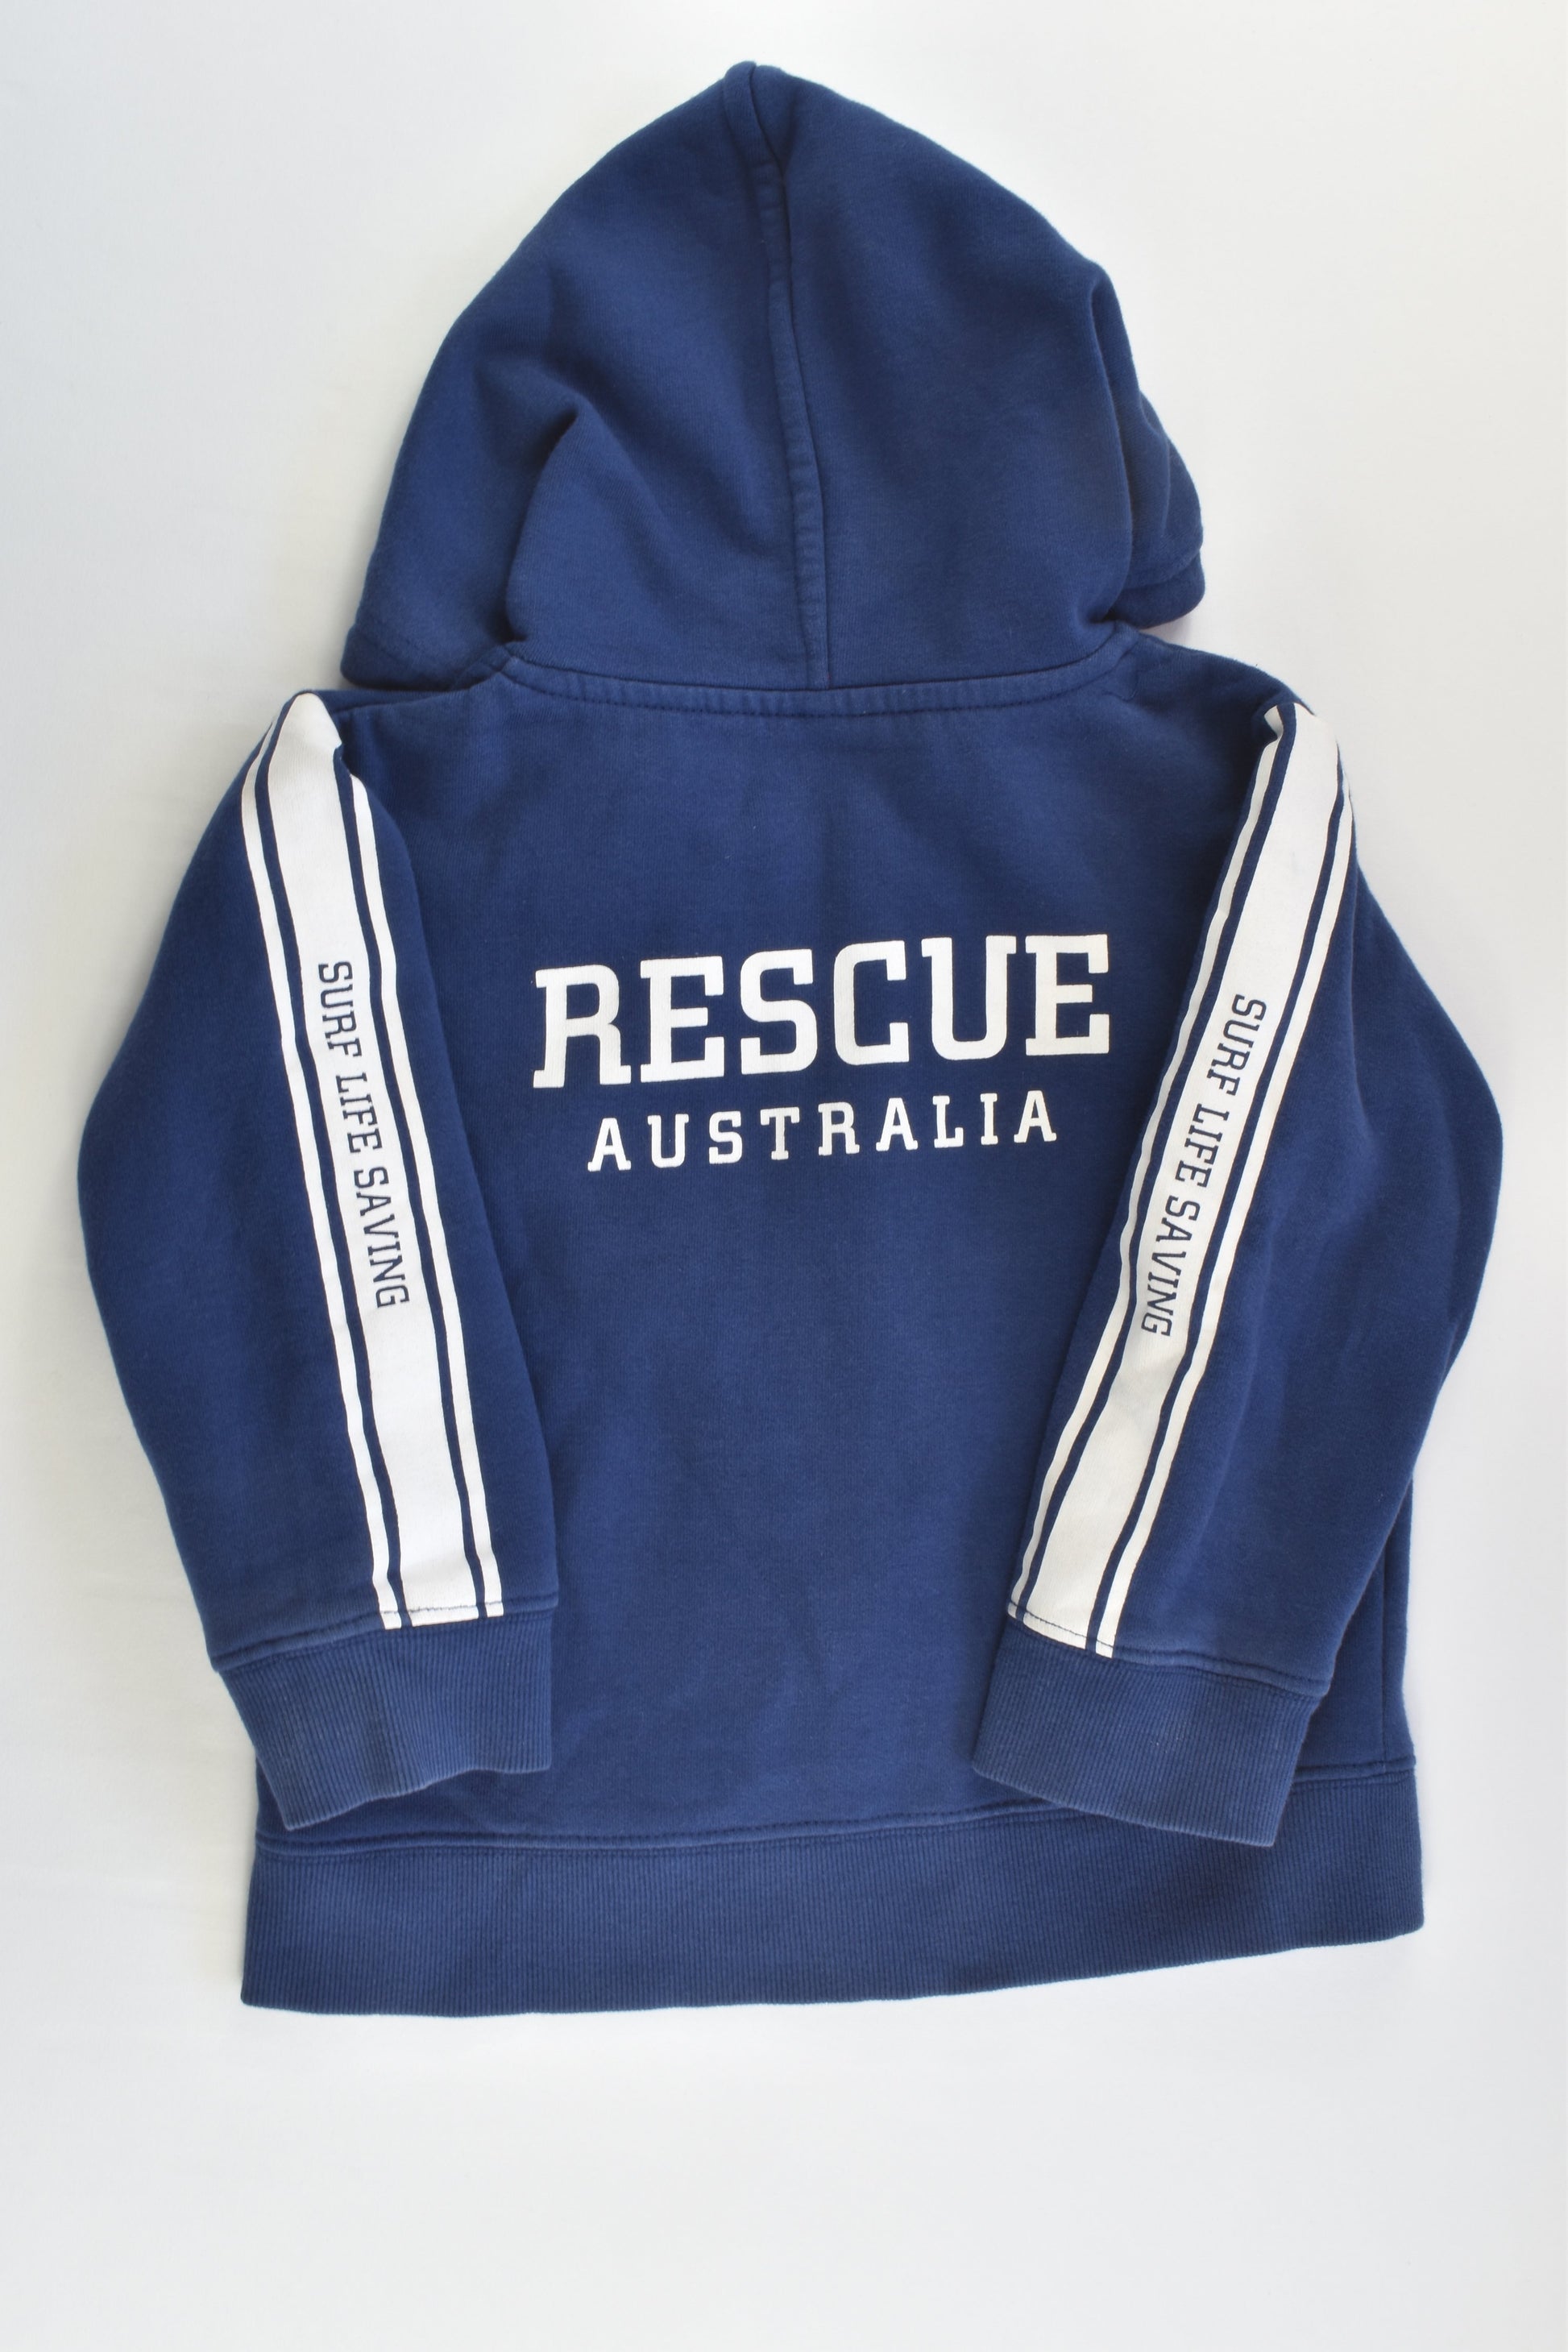 Australian For Life Size 2 'Lifesaver Off Duty' Hooded Jumper